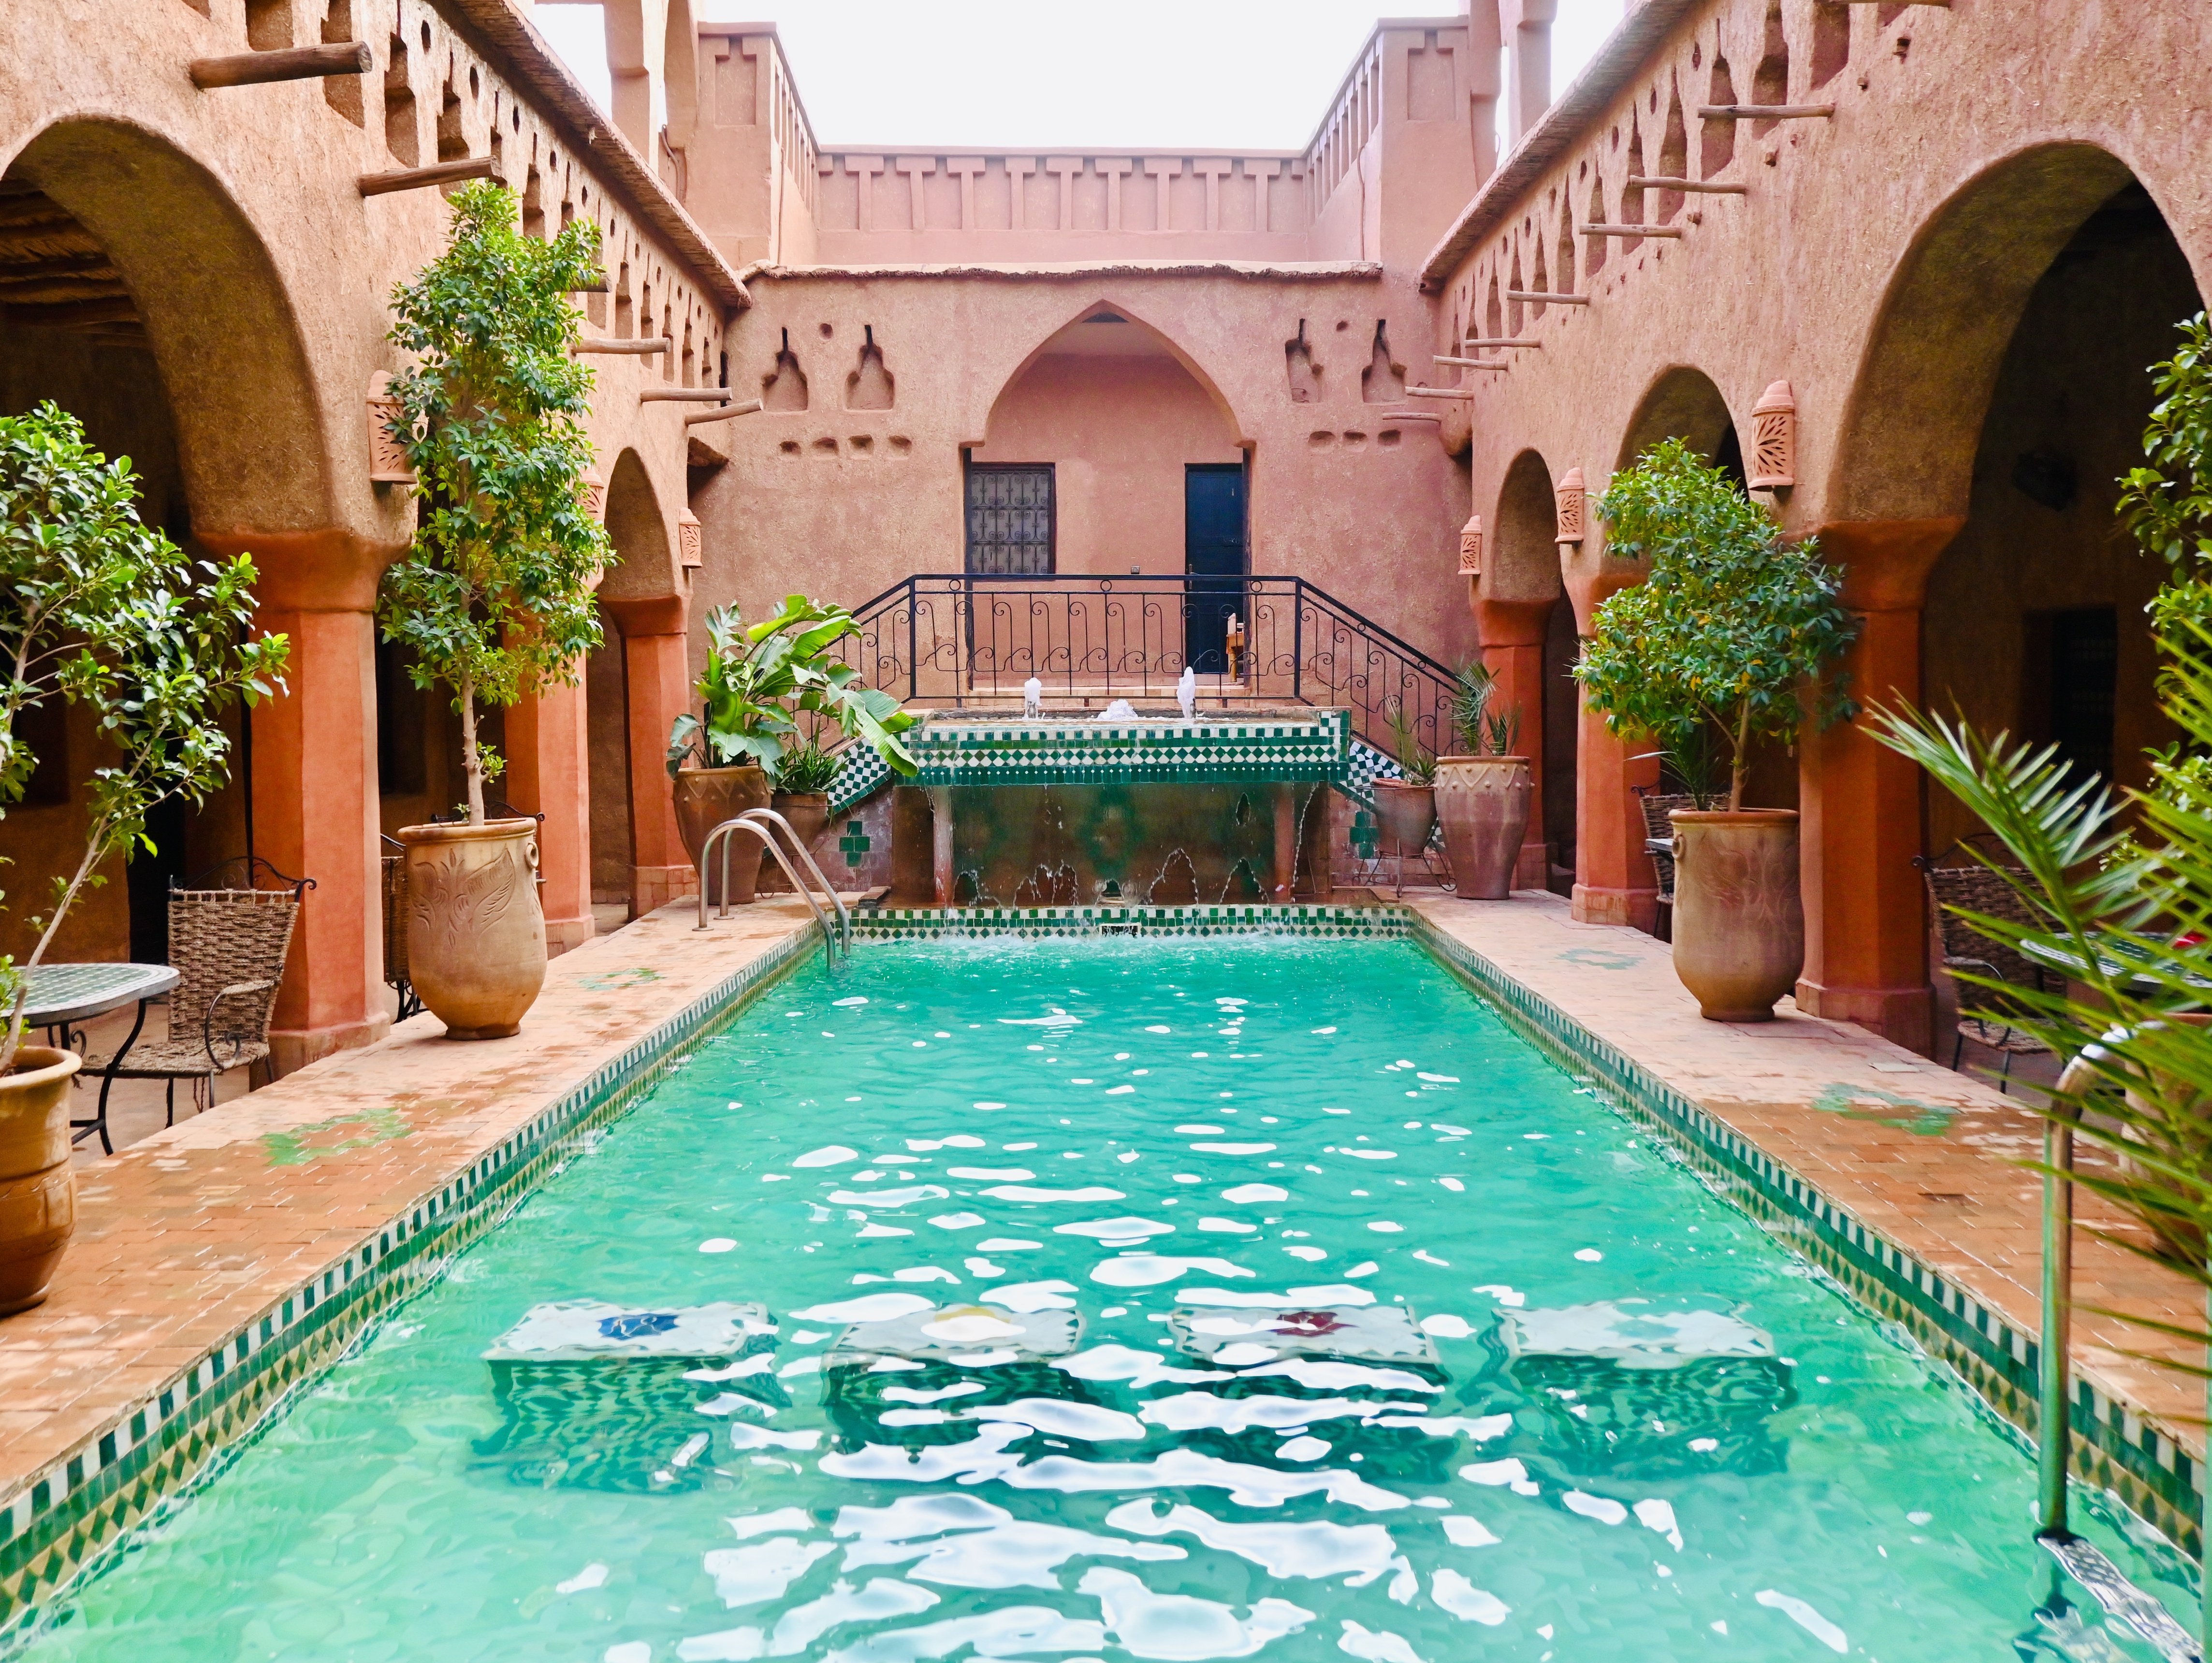 Marokko for family individuell - Erfahrungen mit Kindern in Marokko - Marokko Riad mit Pool